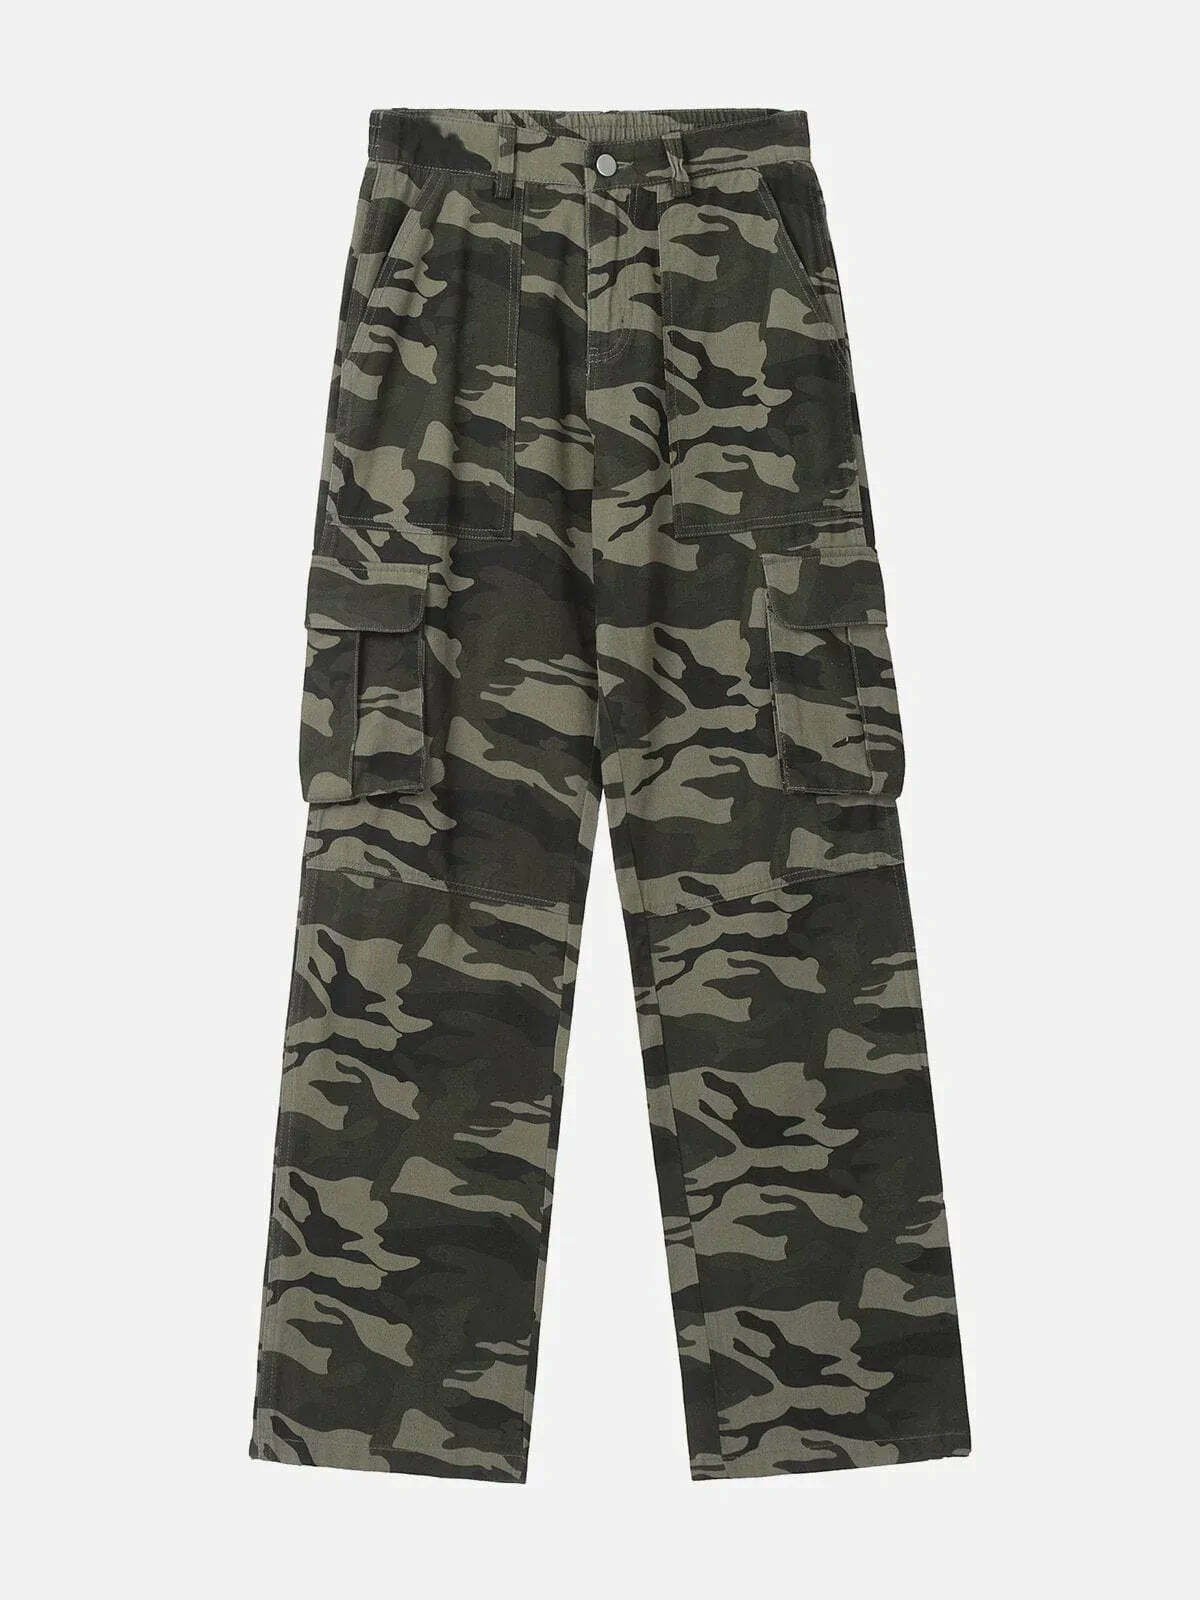 camouflage slit trousers edgy & urban fashion 7154